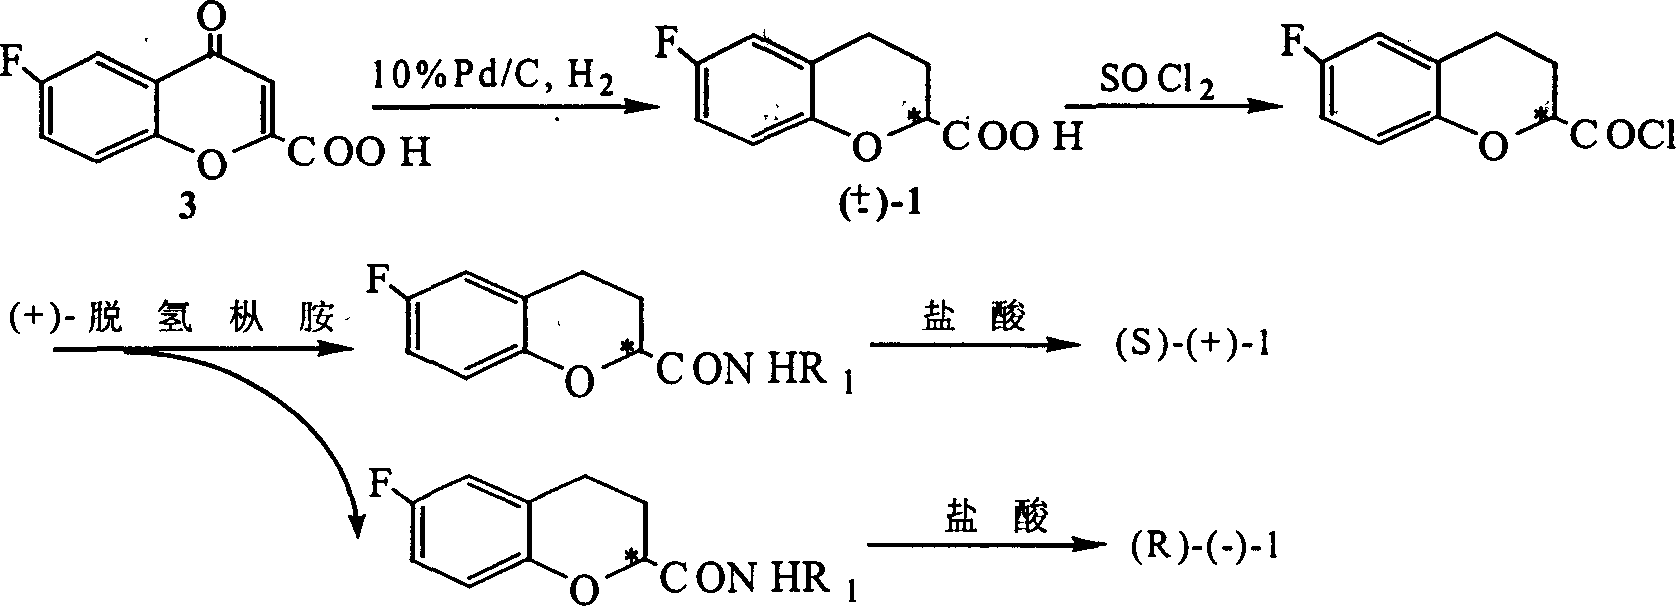 Method for synthesizing optical enantiomer 6-fluoro-3,4-dihydro-2H-1-benzopyran-2-carboxylic acid and 6-fluoro-3,4-dihydro-2H-1-benzopyran-2-carboxylate